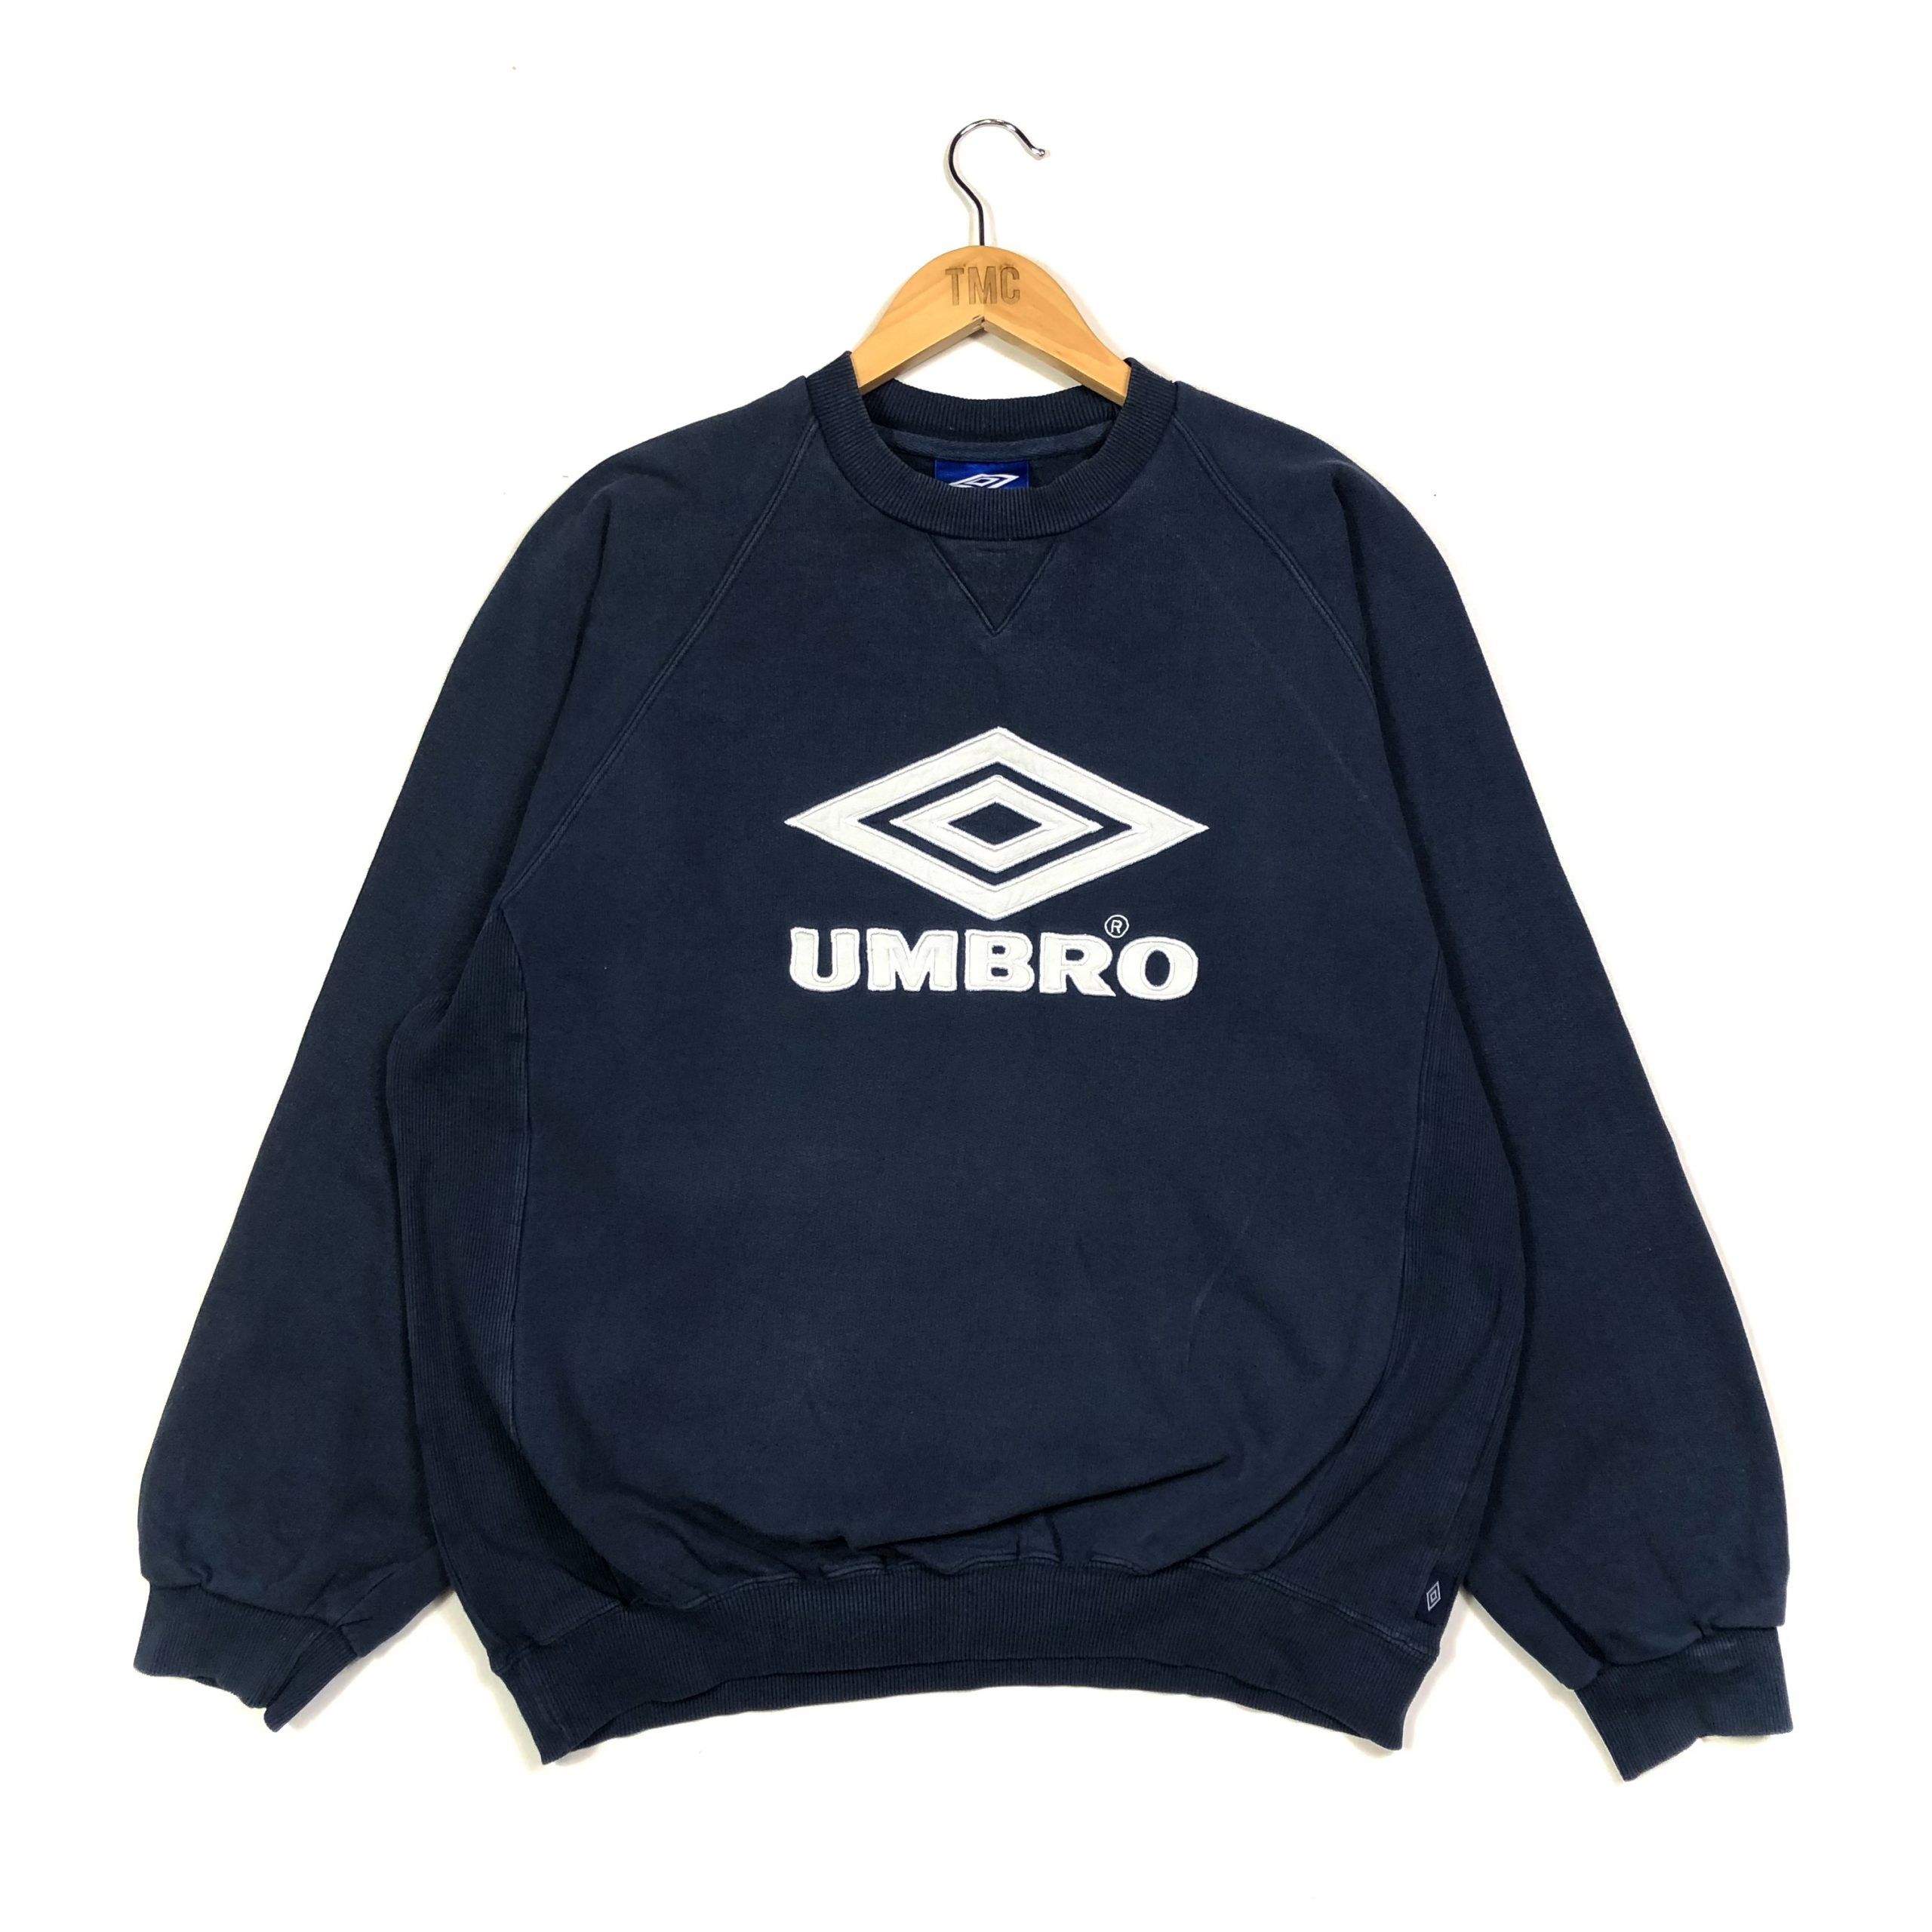 90's Umbro Embroidered Sweatshirt - Navy - XL - TMC Vintage Clothing